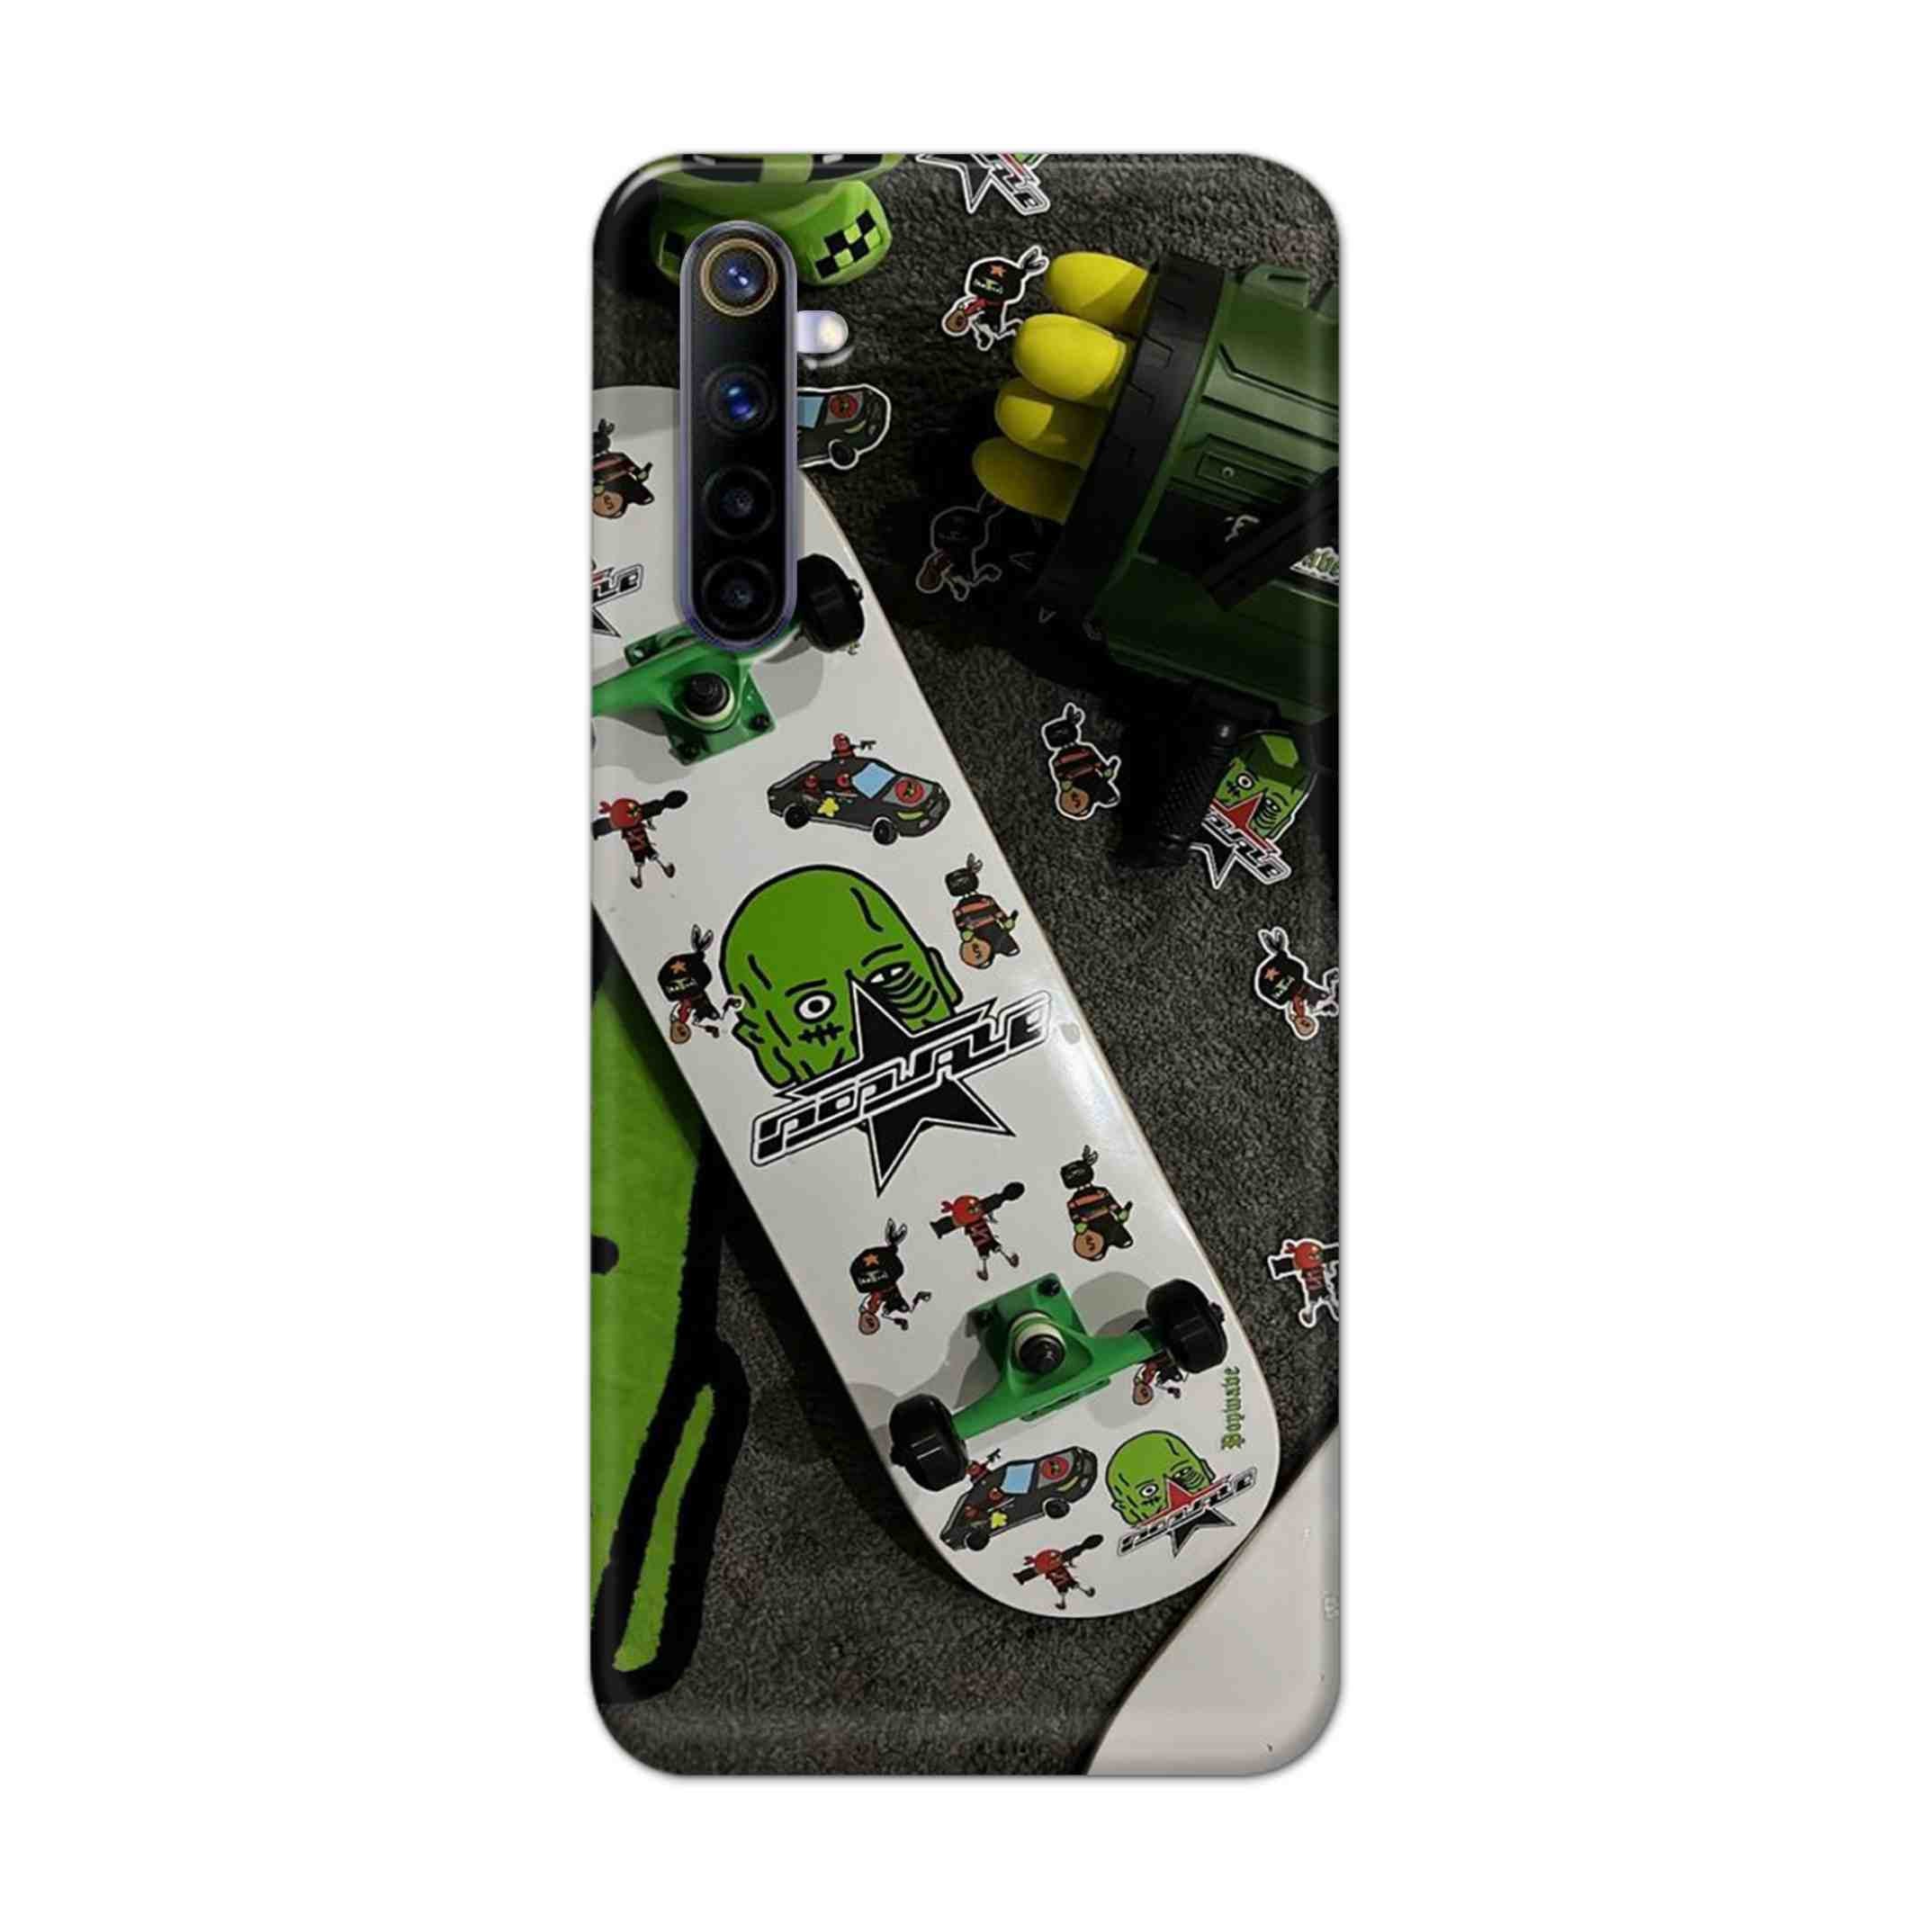 Buy Hulk Skateboard Hard Back Mobile Phone Case Cover For REALME 6 PRO Online